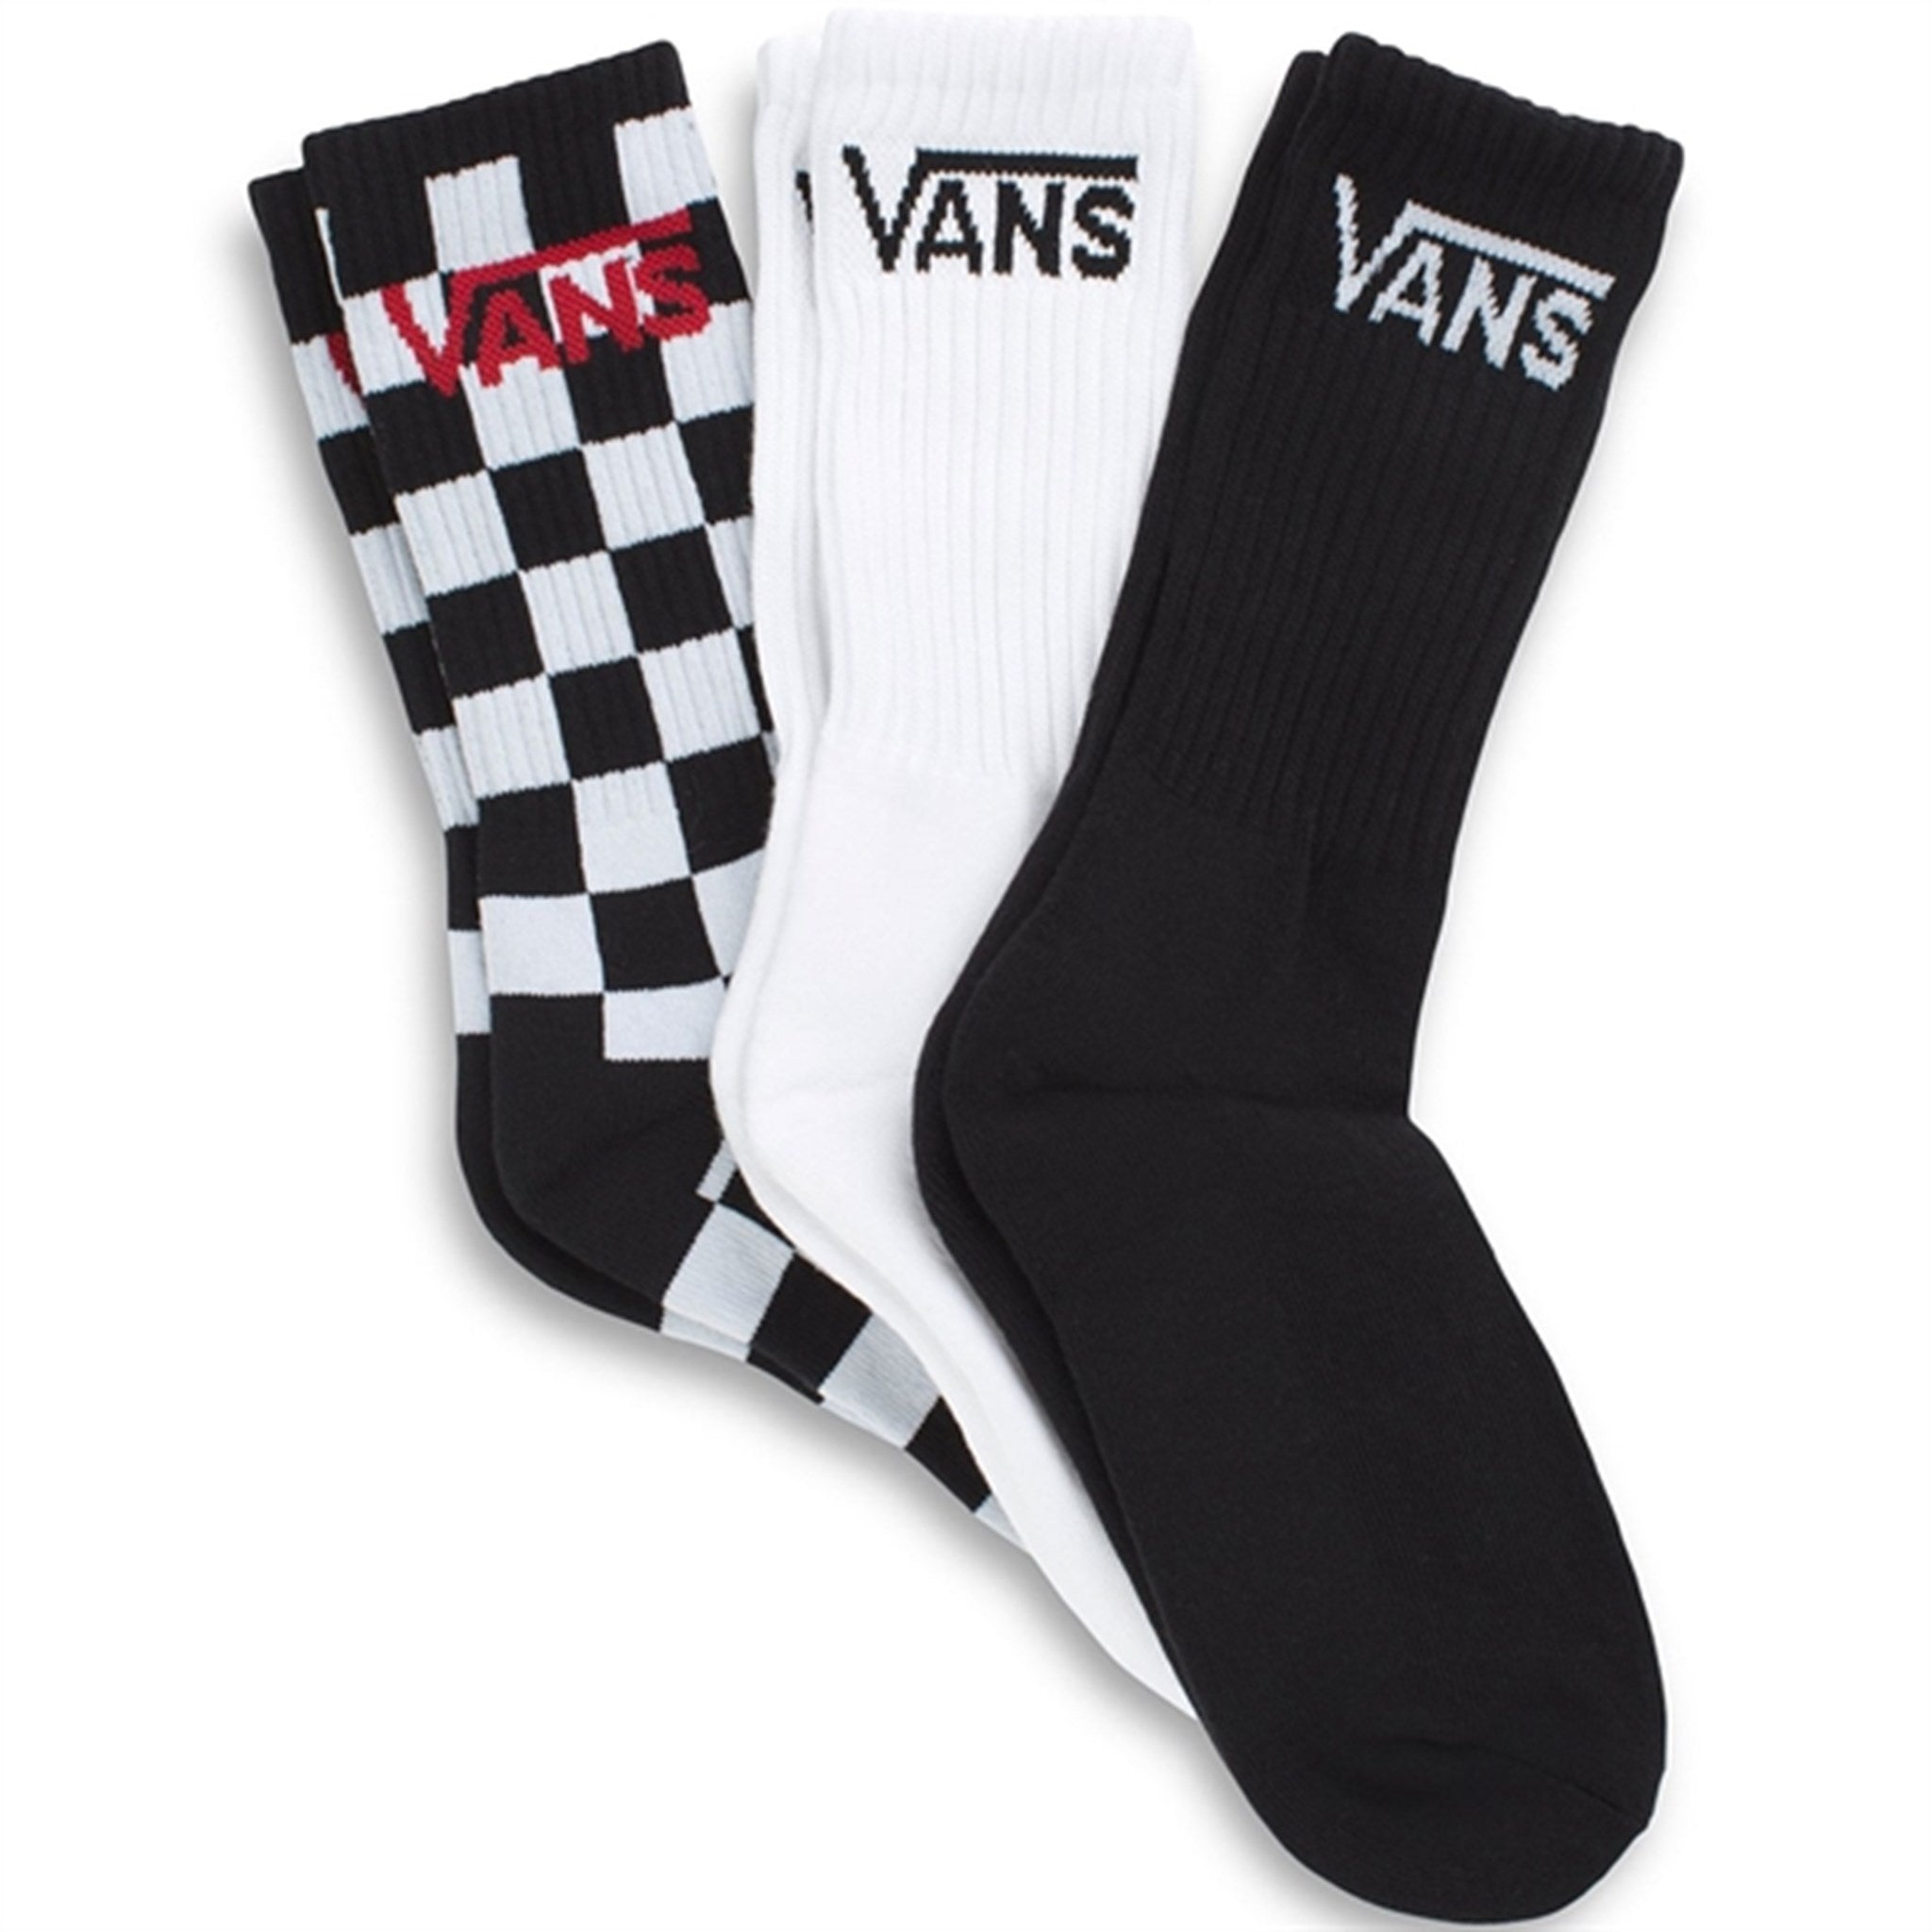 VANS Classic Crew Socks Black Checkerboard